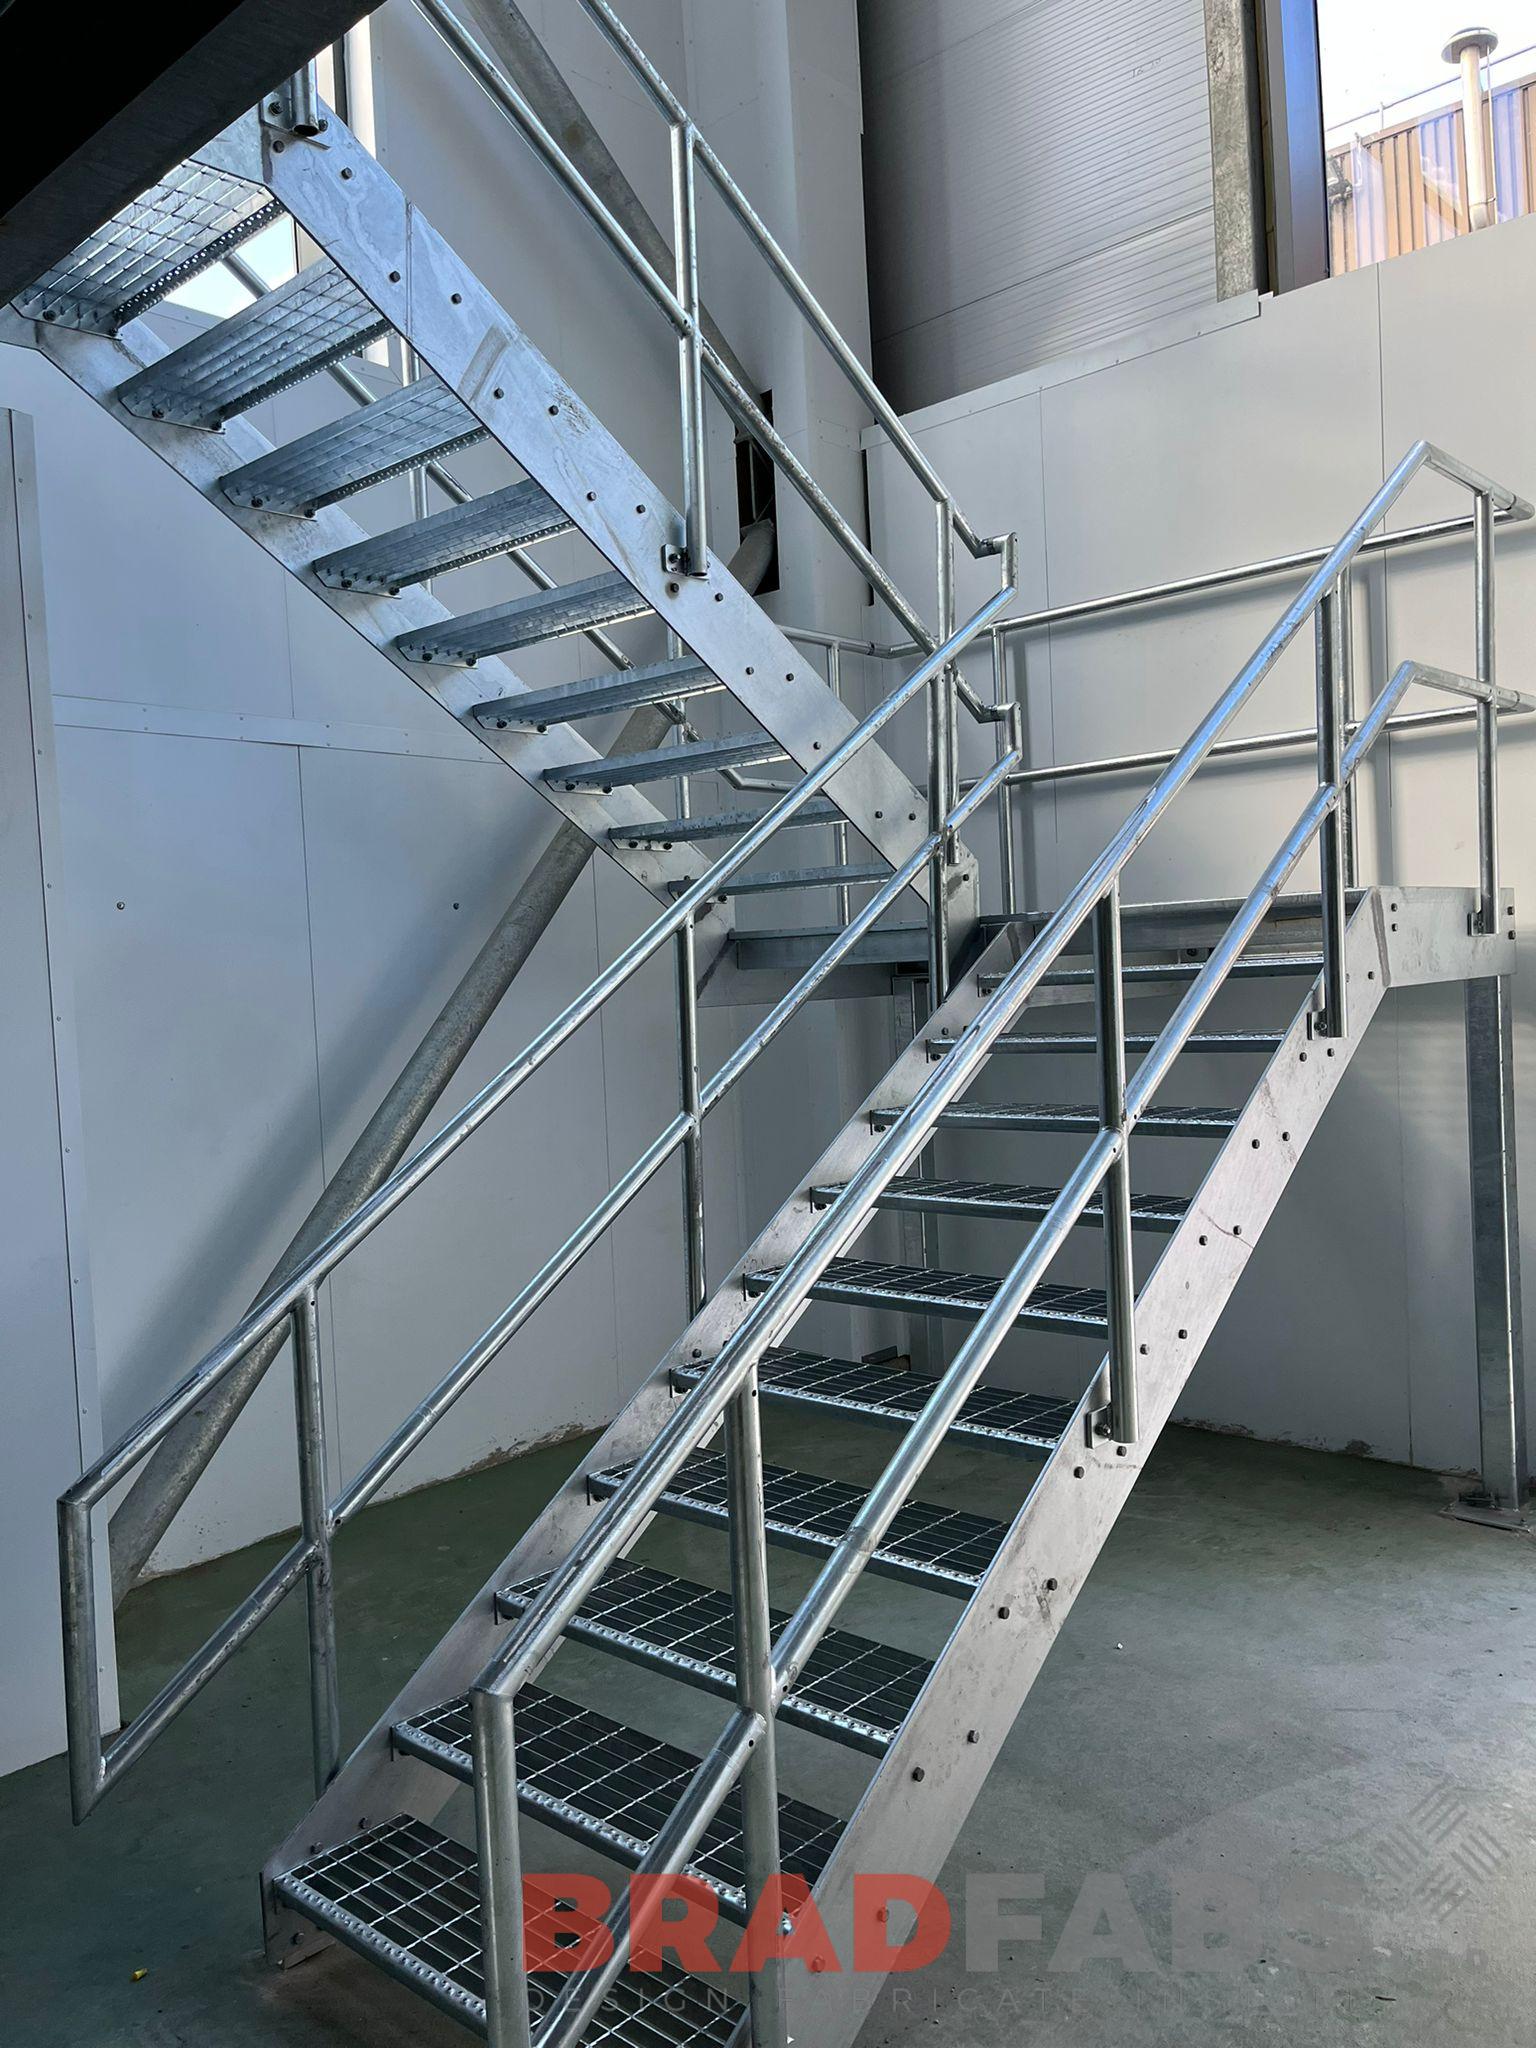 Bradfabs, staircase, internal staircase, steel staircase, metal stair, balustrade, open mesh treads 